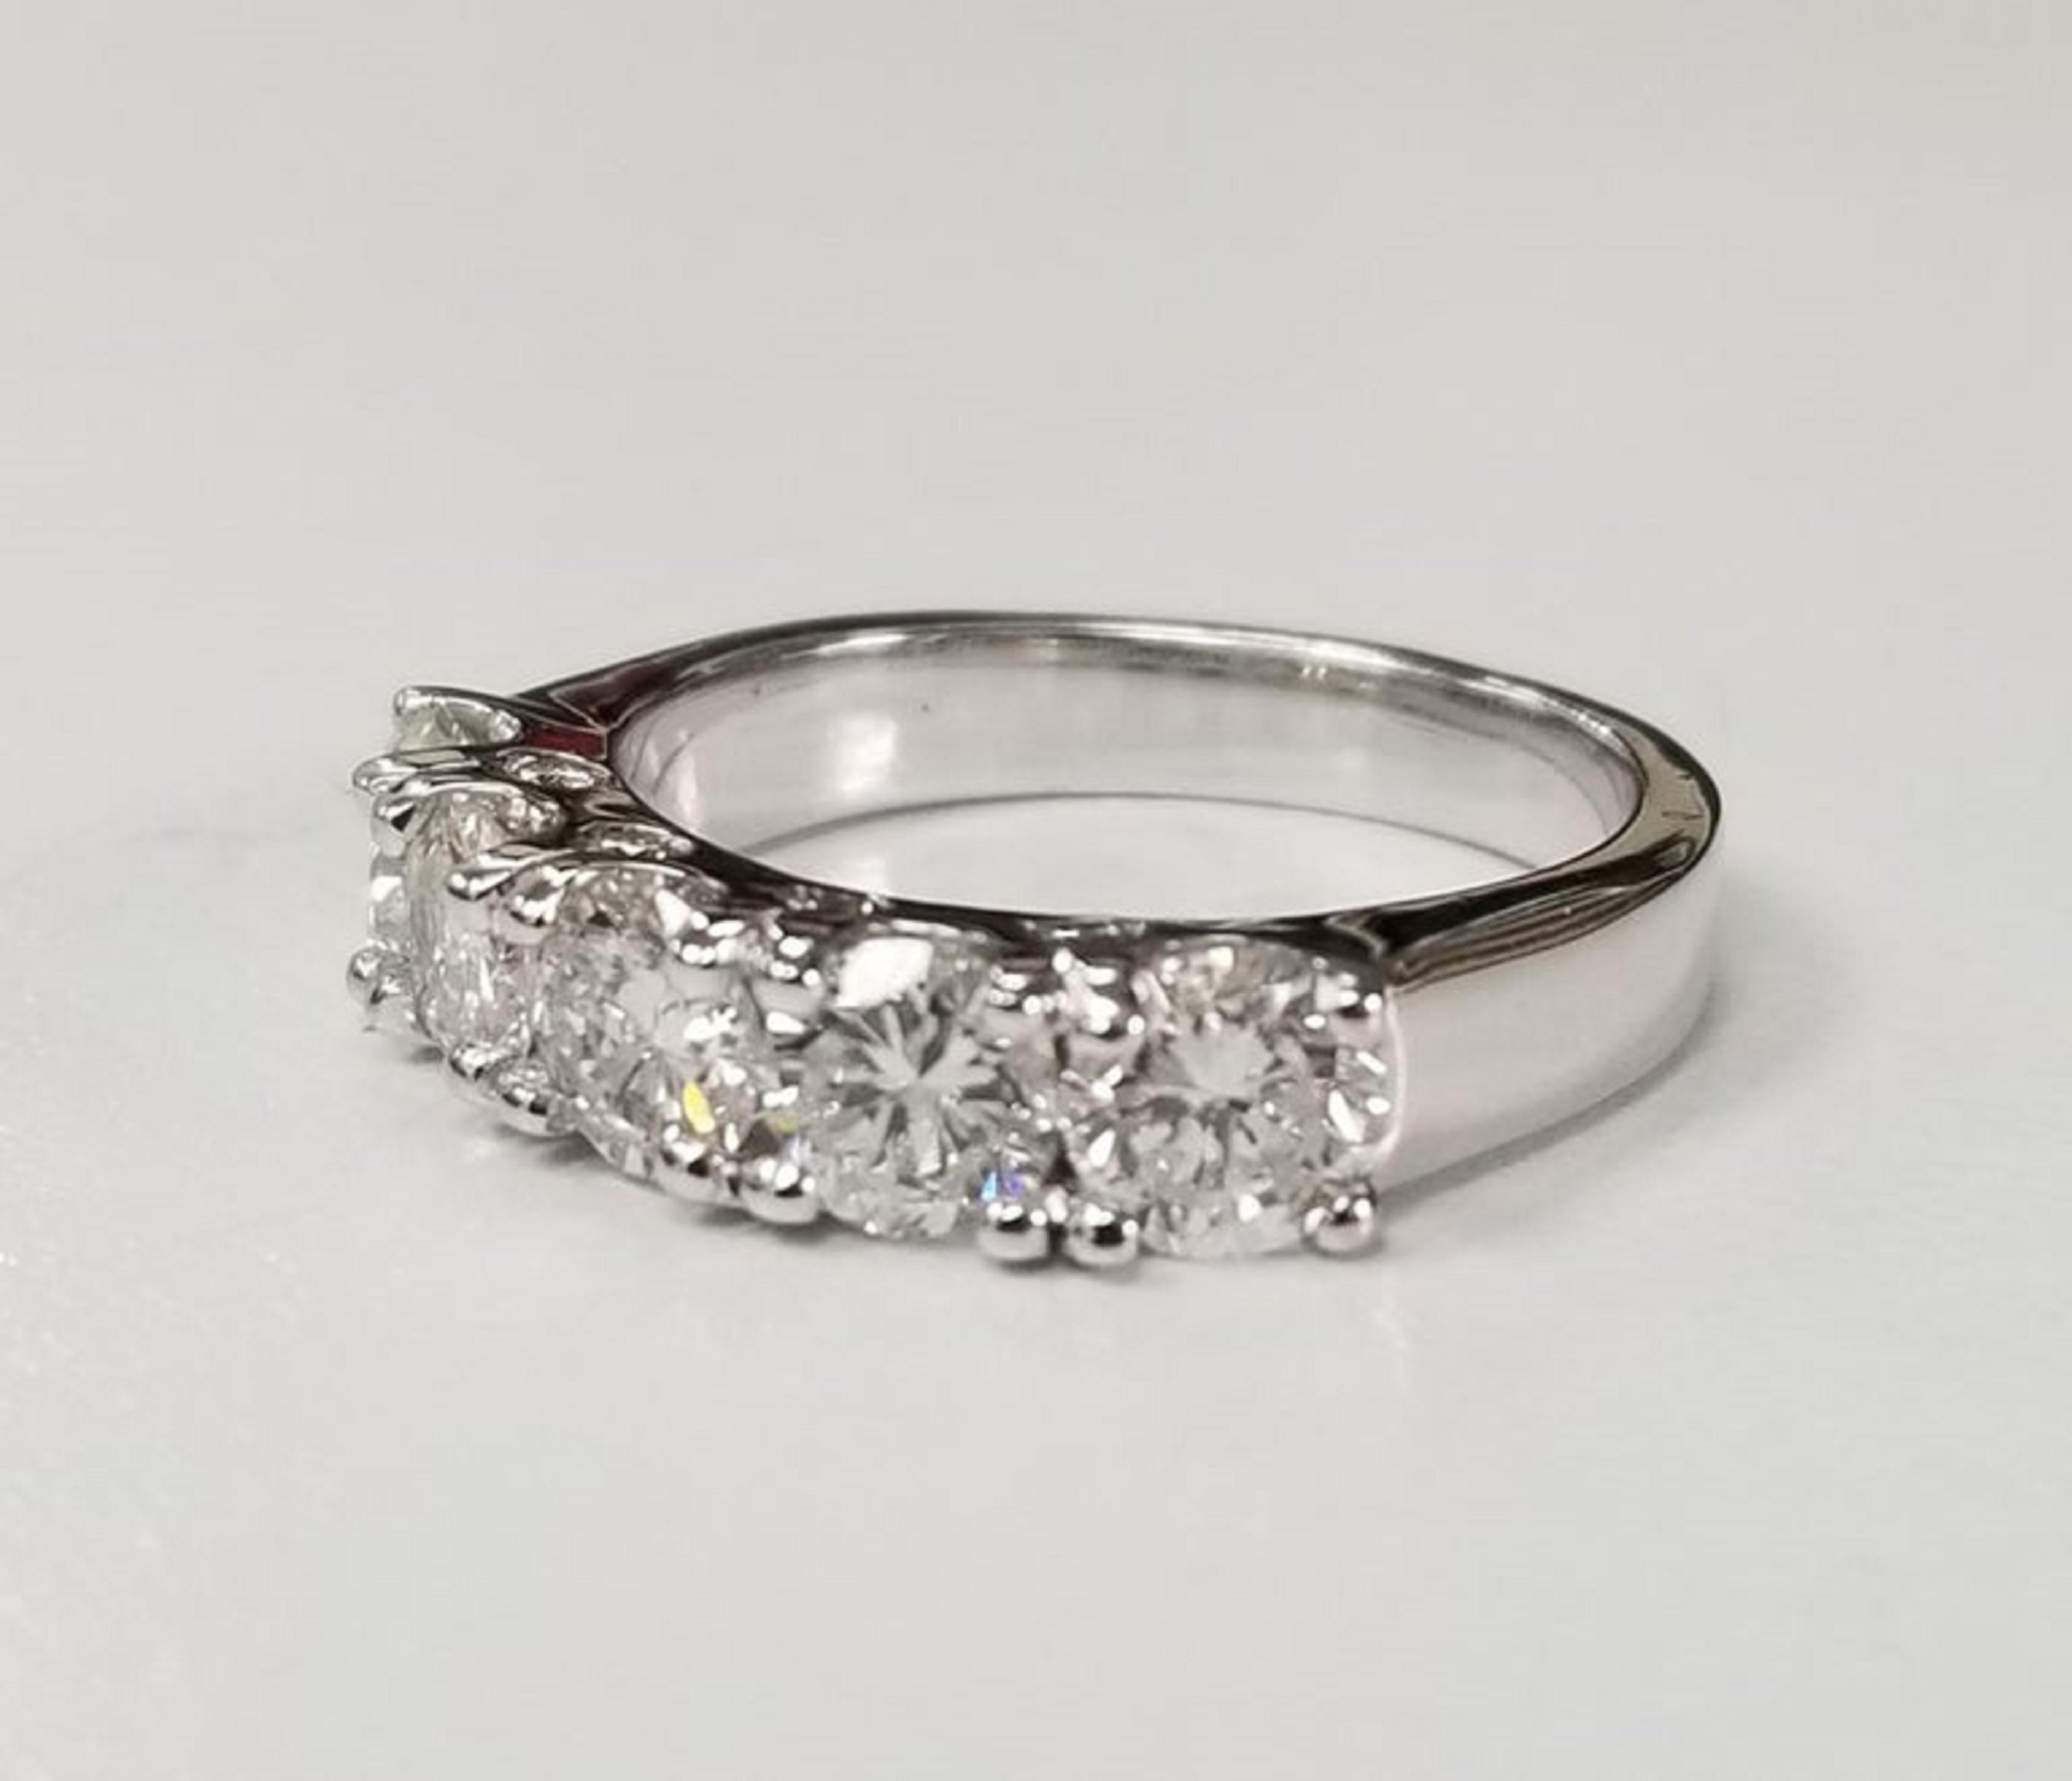 14k white gold diamond wedding ring containing 5 brilliant cut diamonds; color H-I